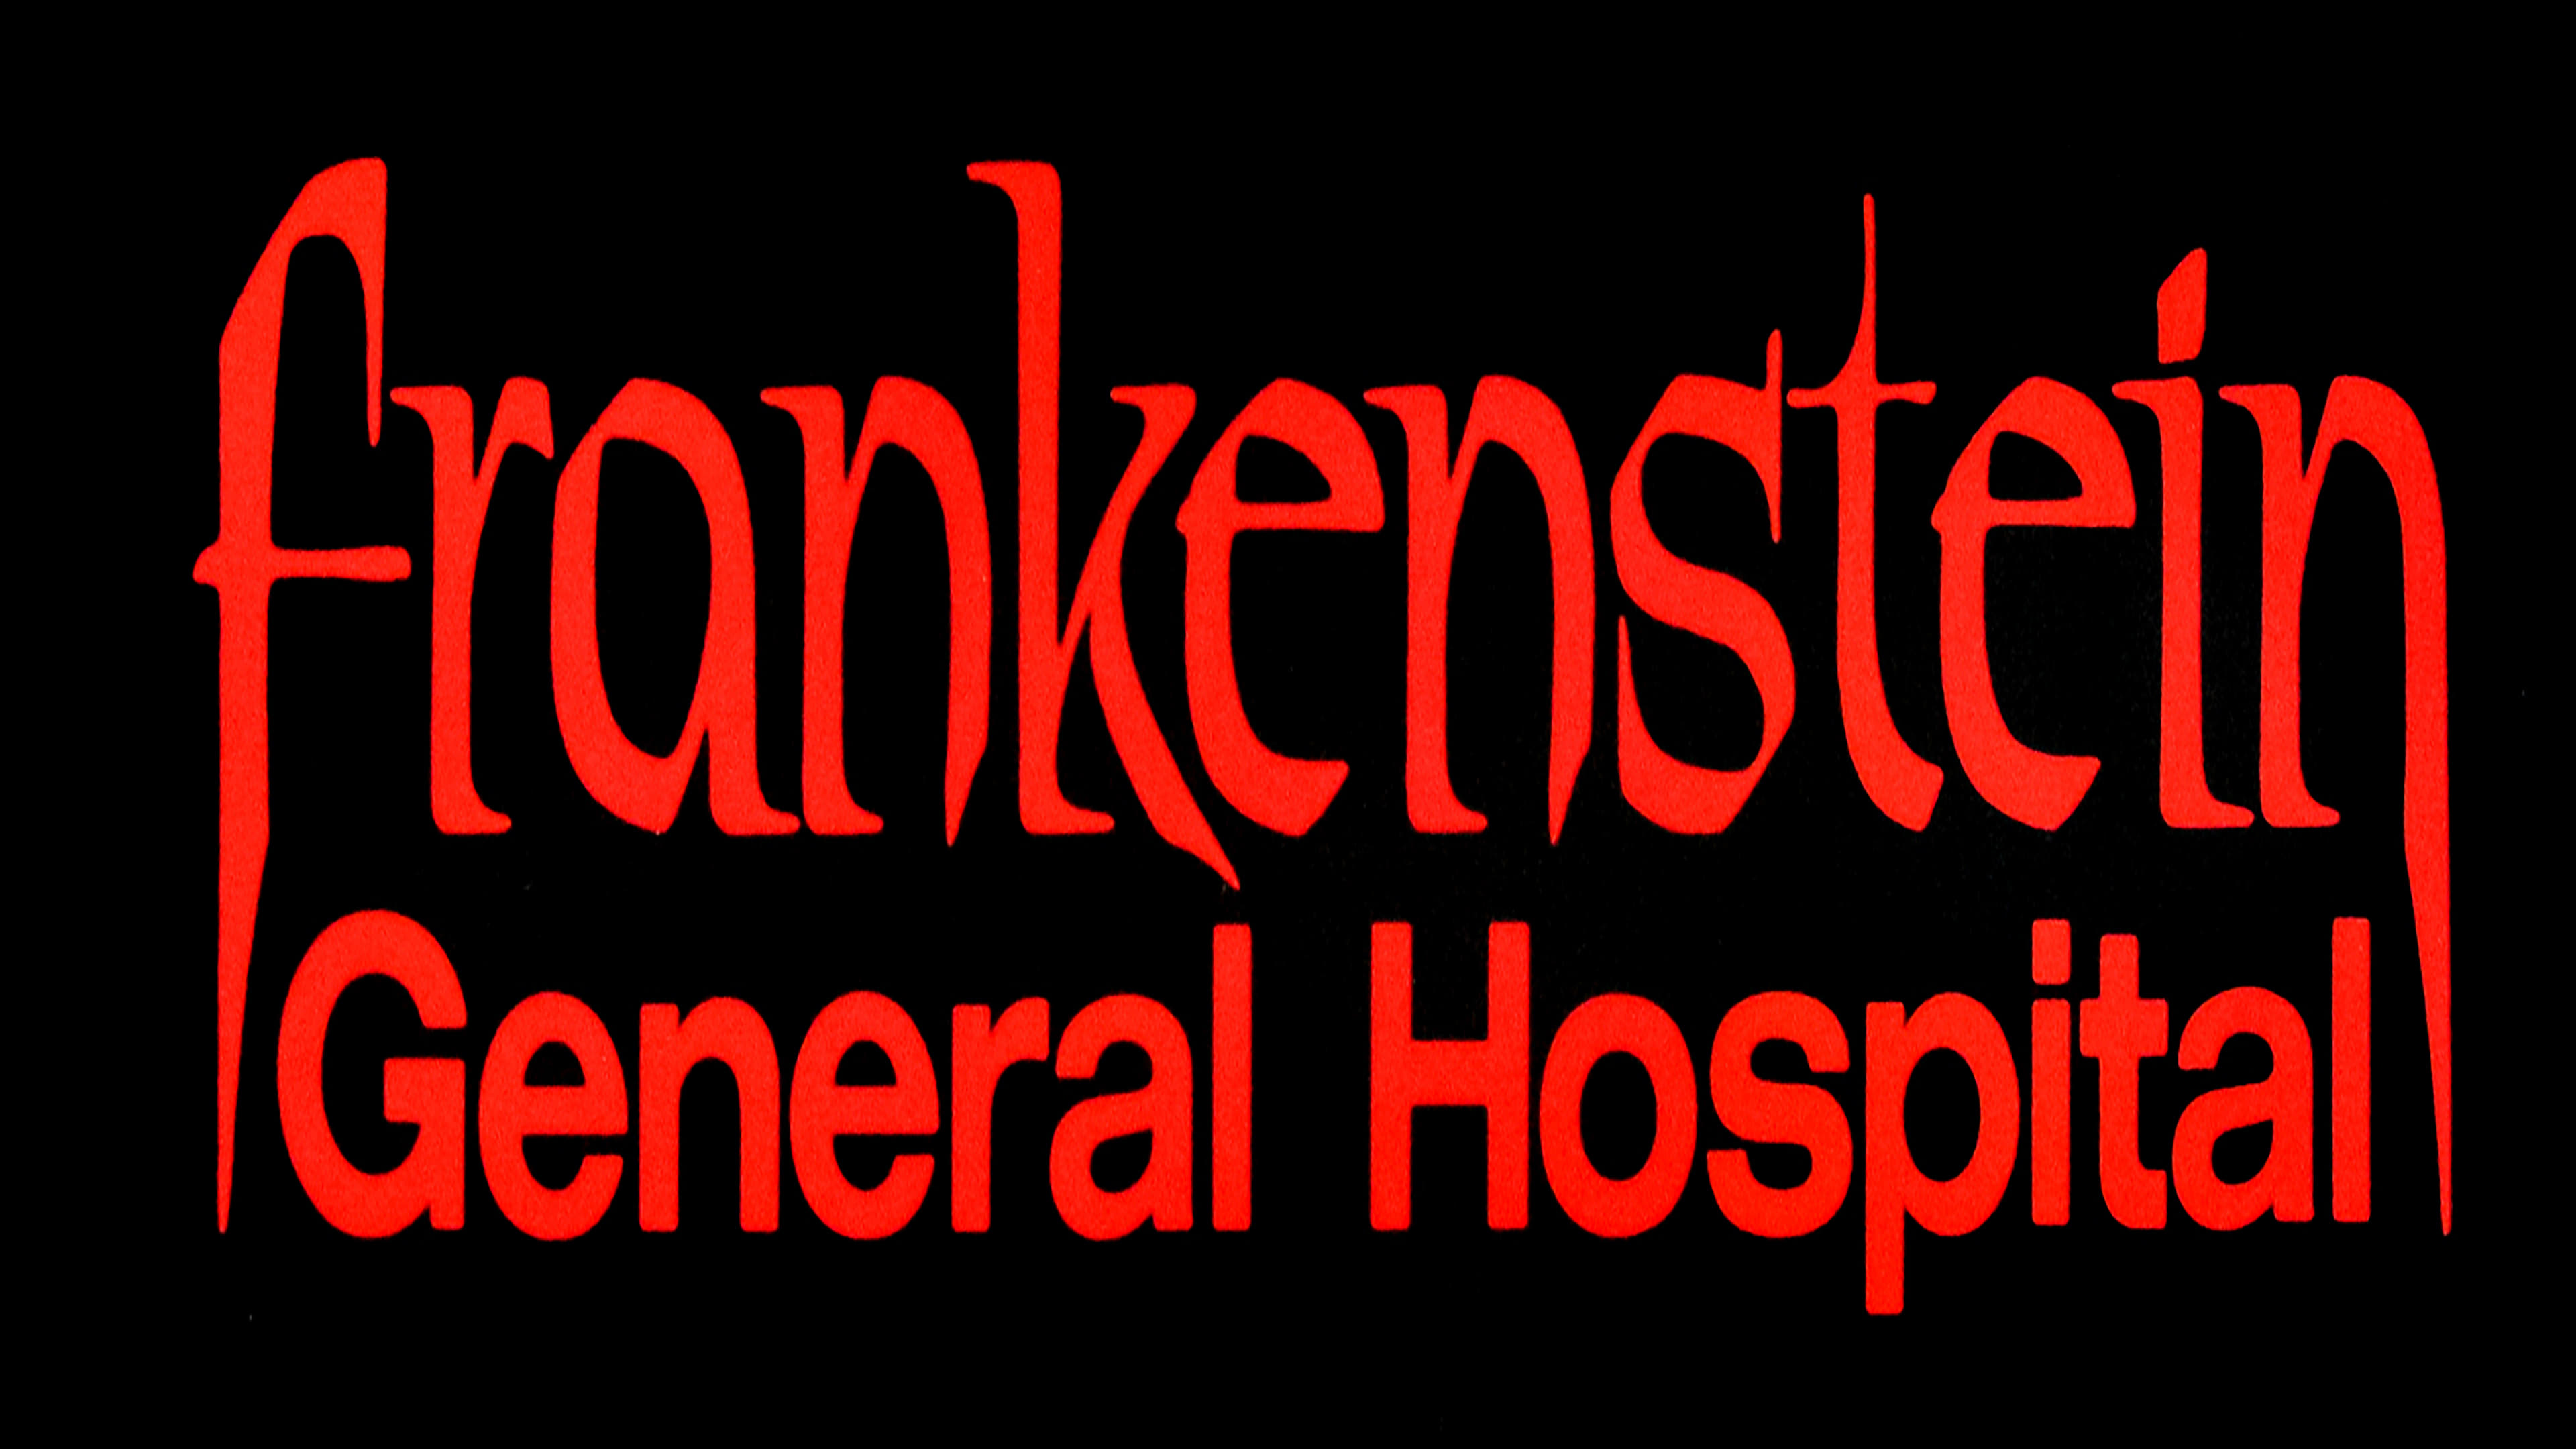 Frankenstein General Hospital Trailer 1988.